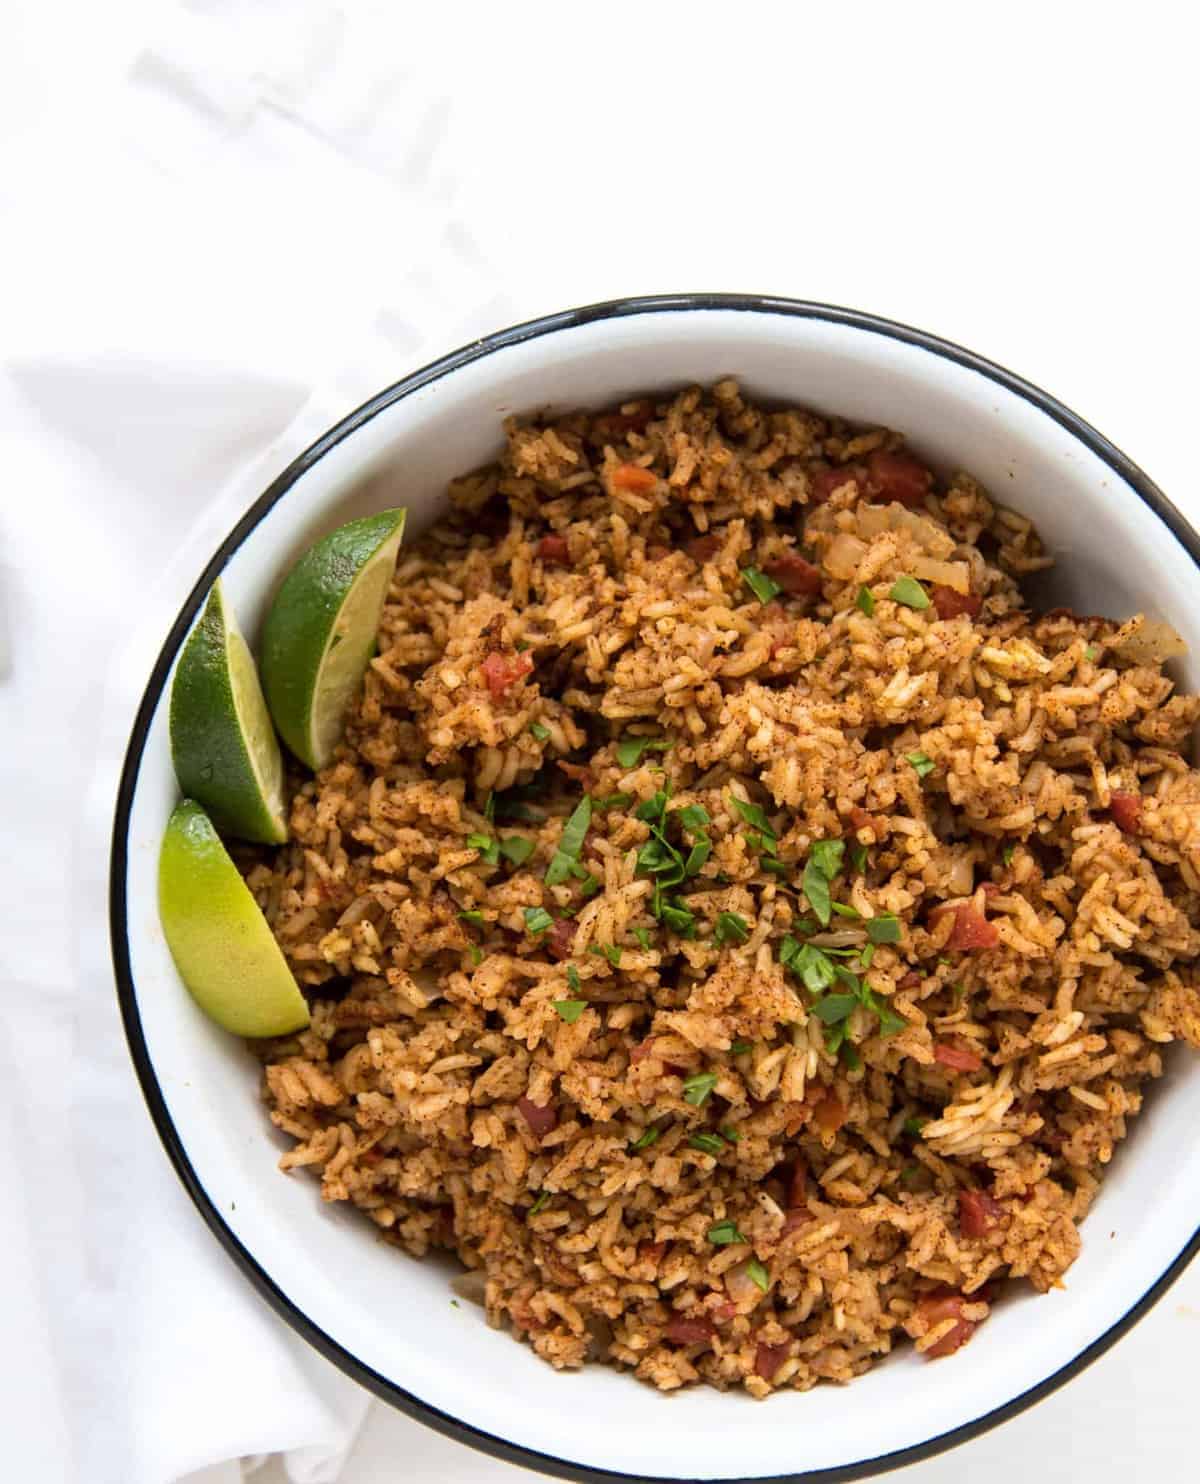 https://www.blessthismessplease.com/wp-content/uploads/2019/08/rice-cooker-spanish-rice.jpg